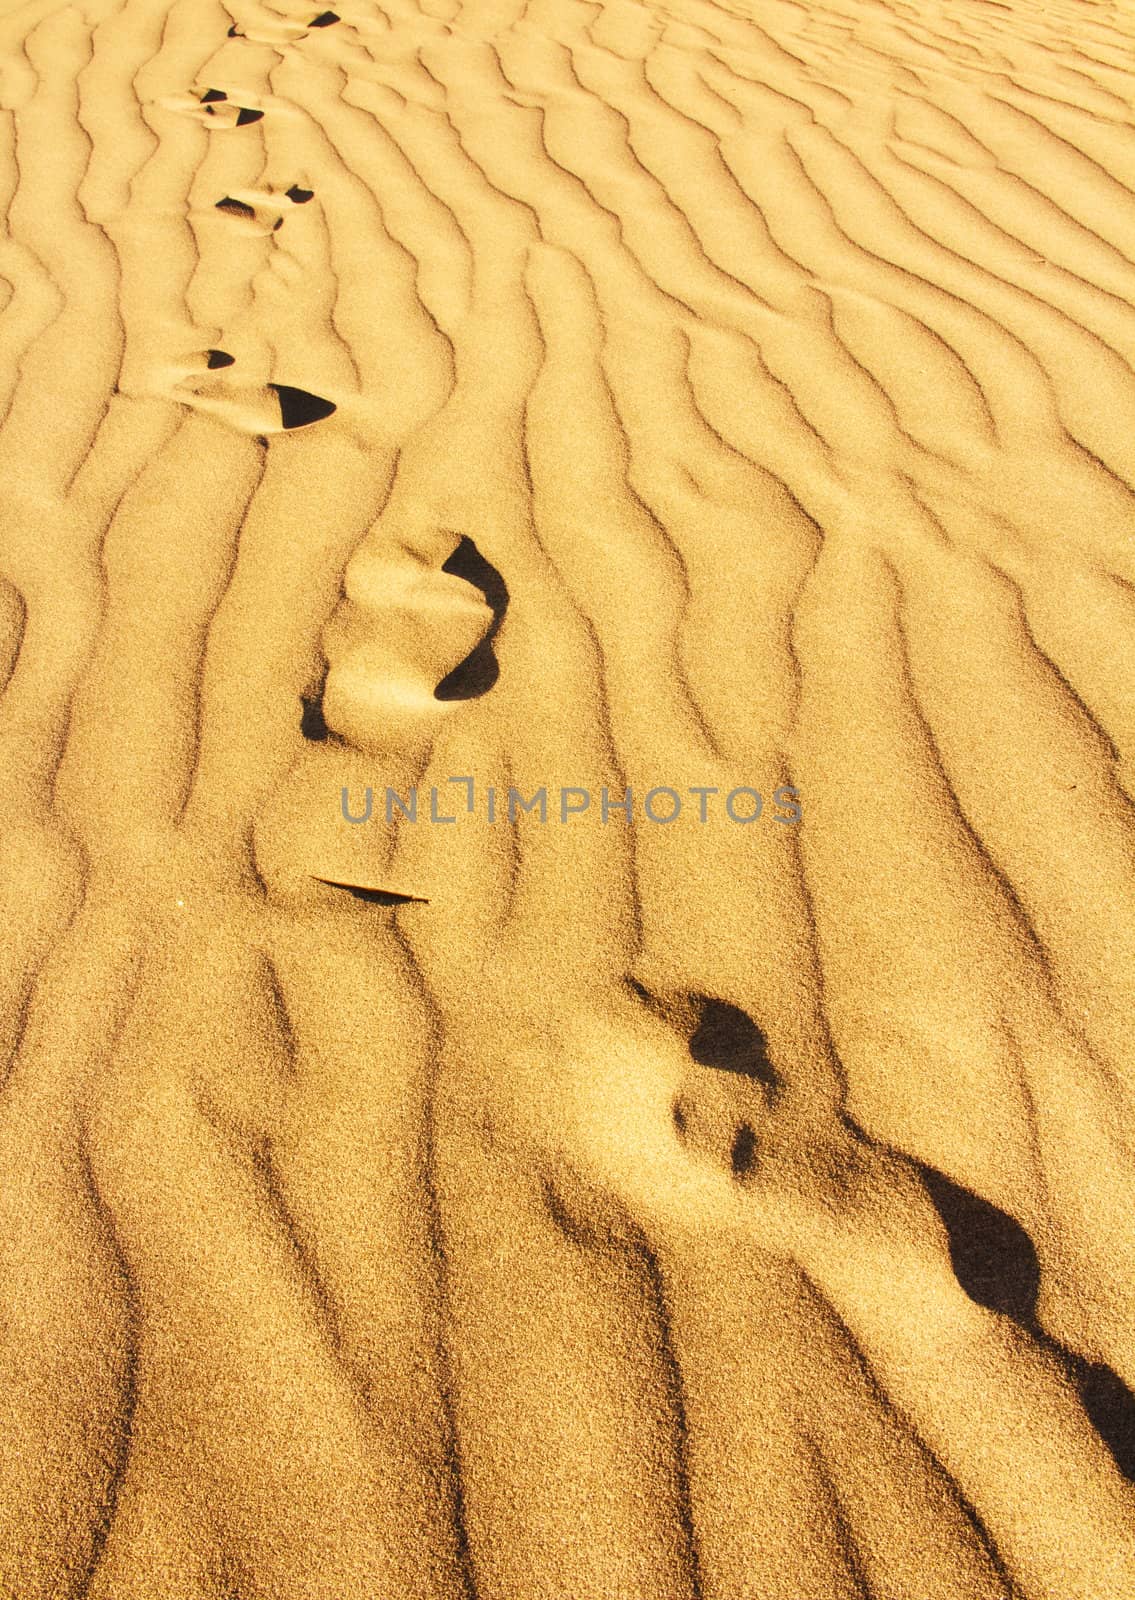 footprints in the golden sand dunes with irregular texture